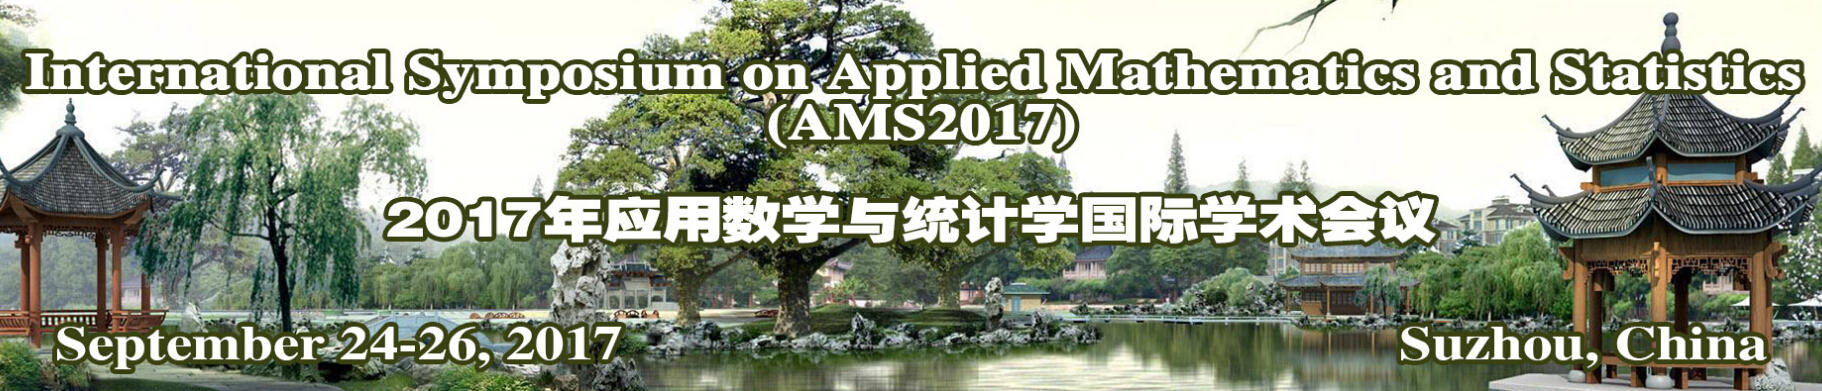 Int. Symposium on Applied Mathematics and Statistics